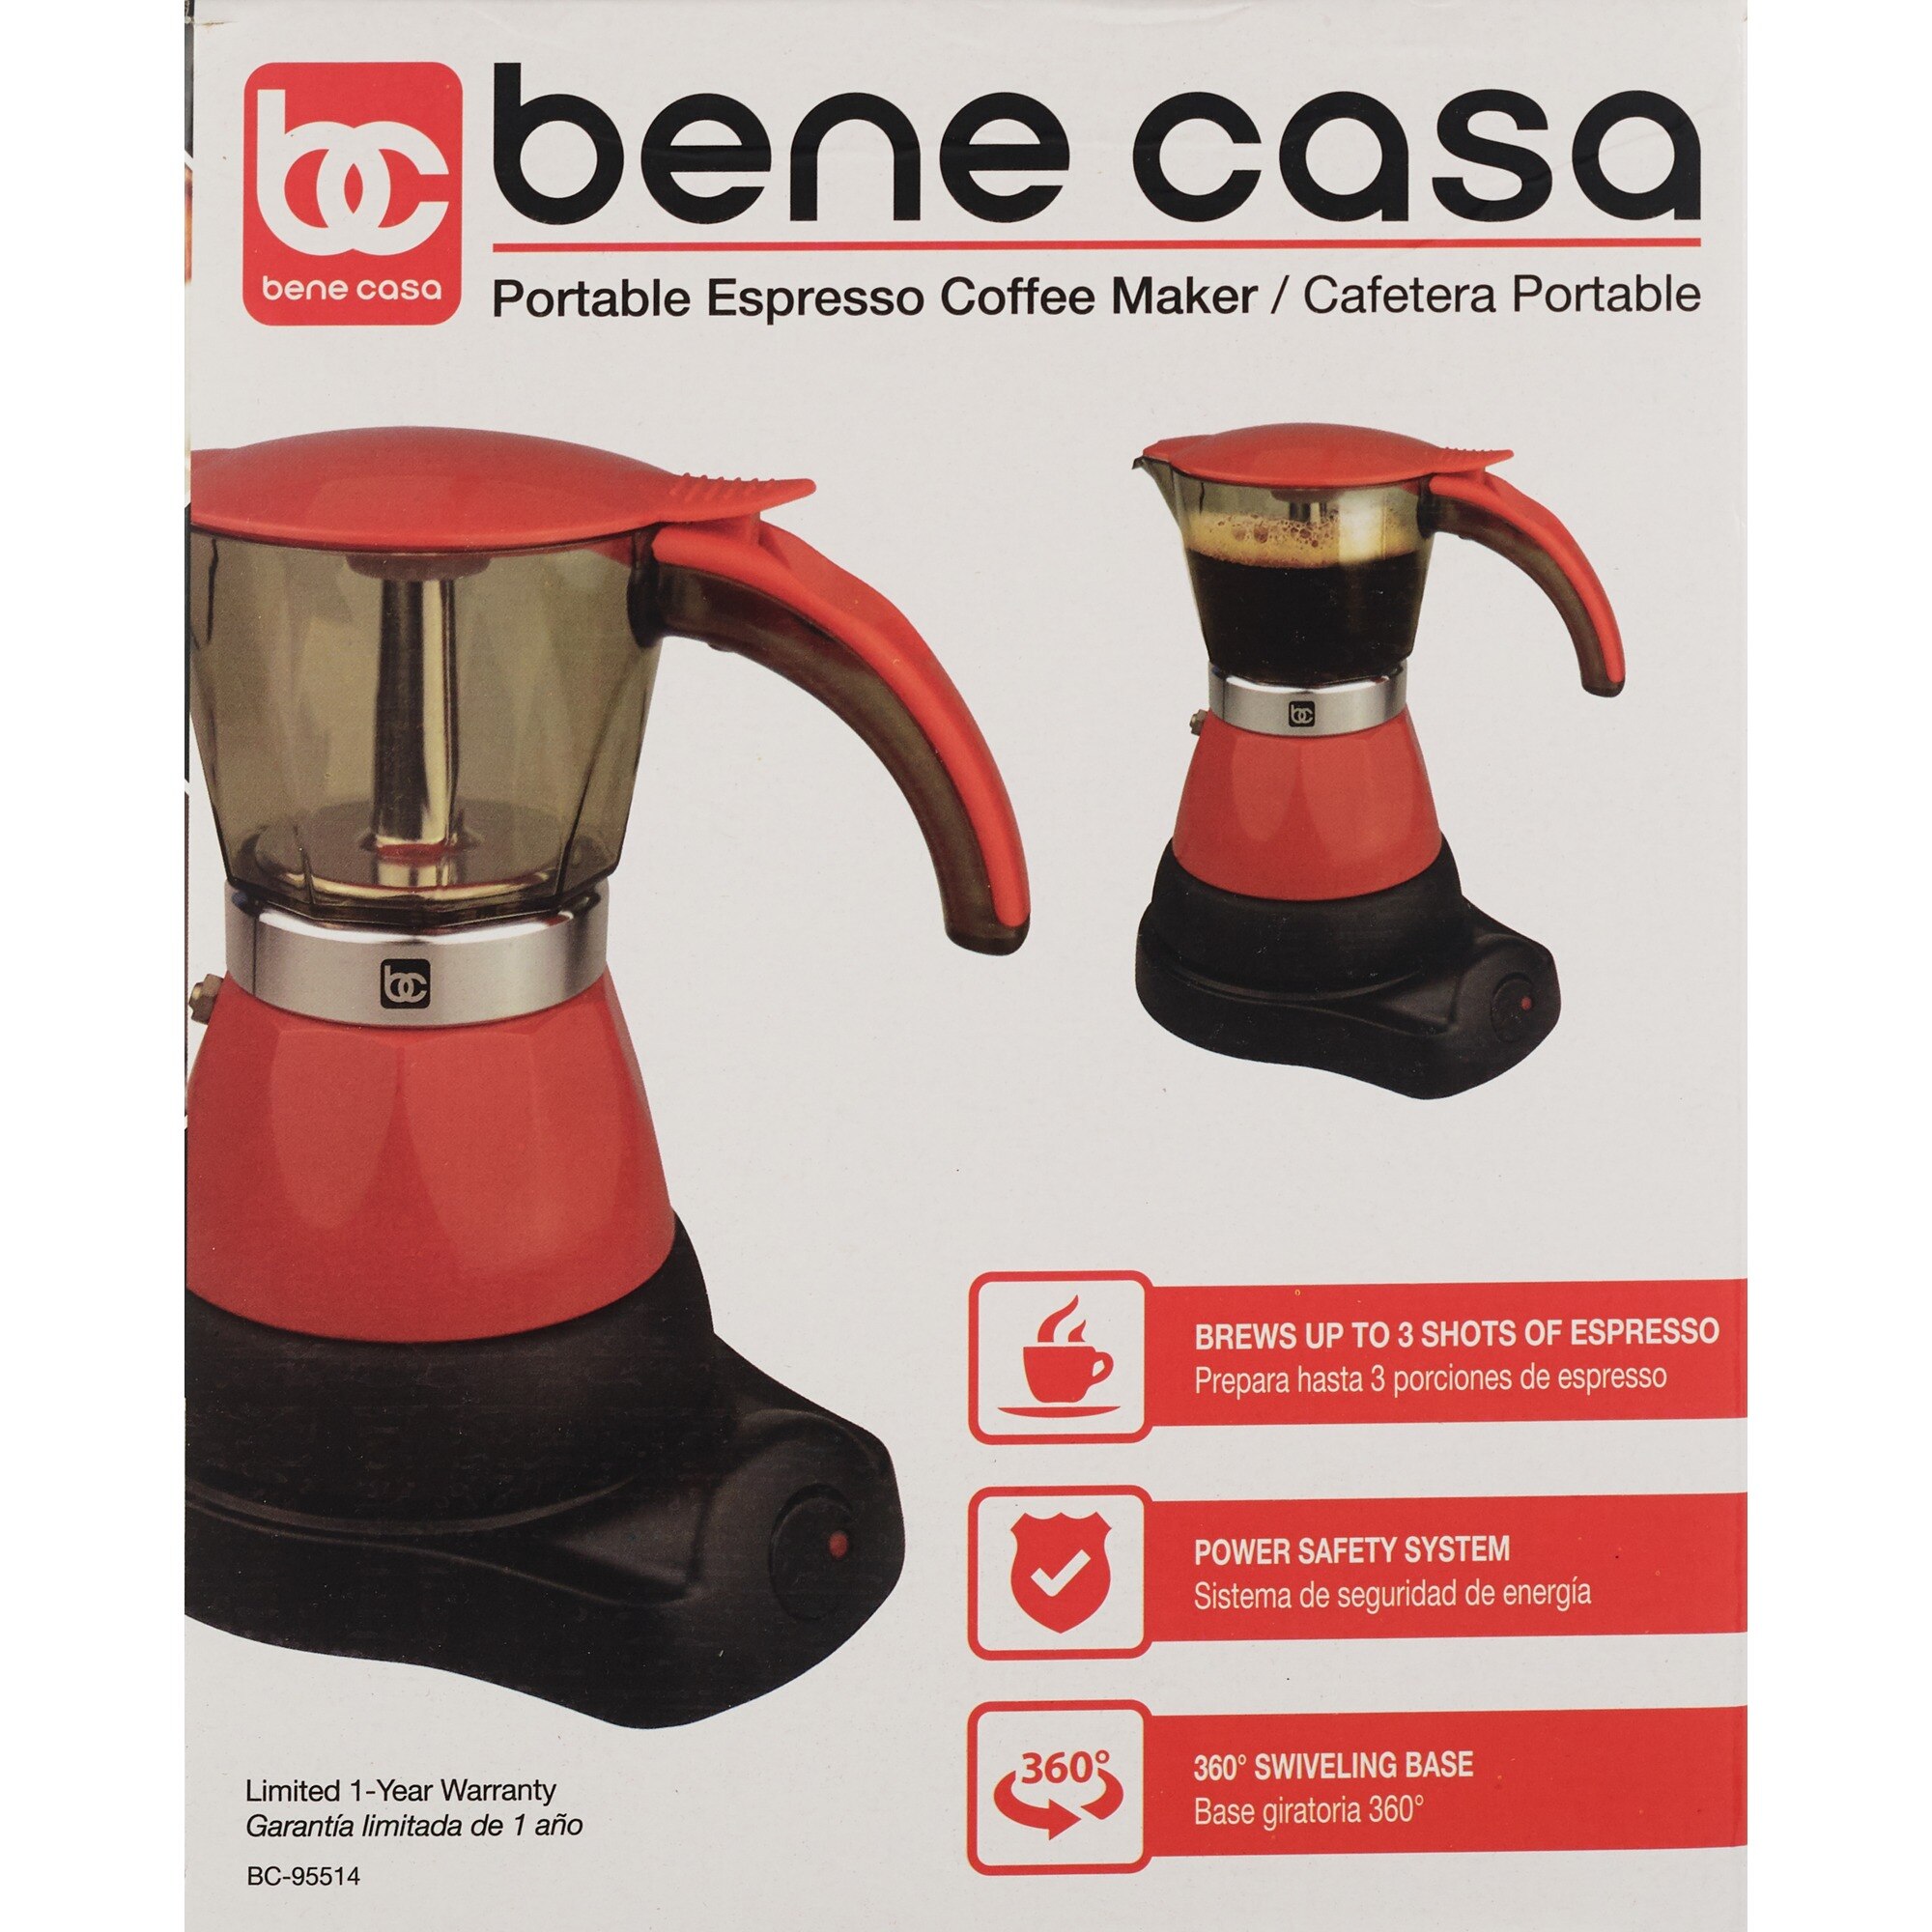 Bene Casa Electric Espresso Maker/Cafetera, Red, 3 CUP